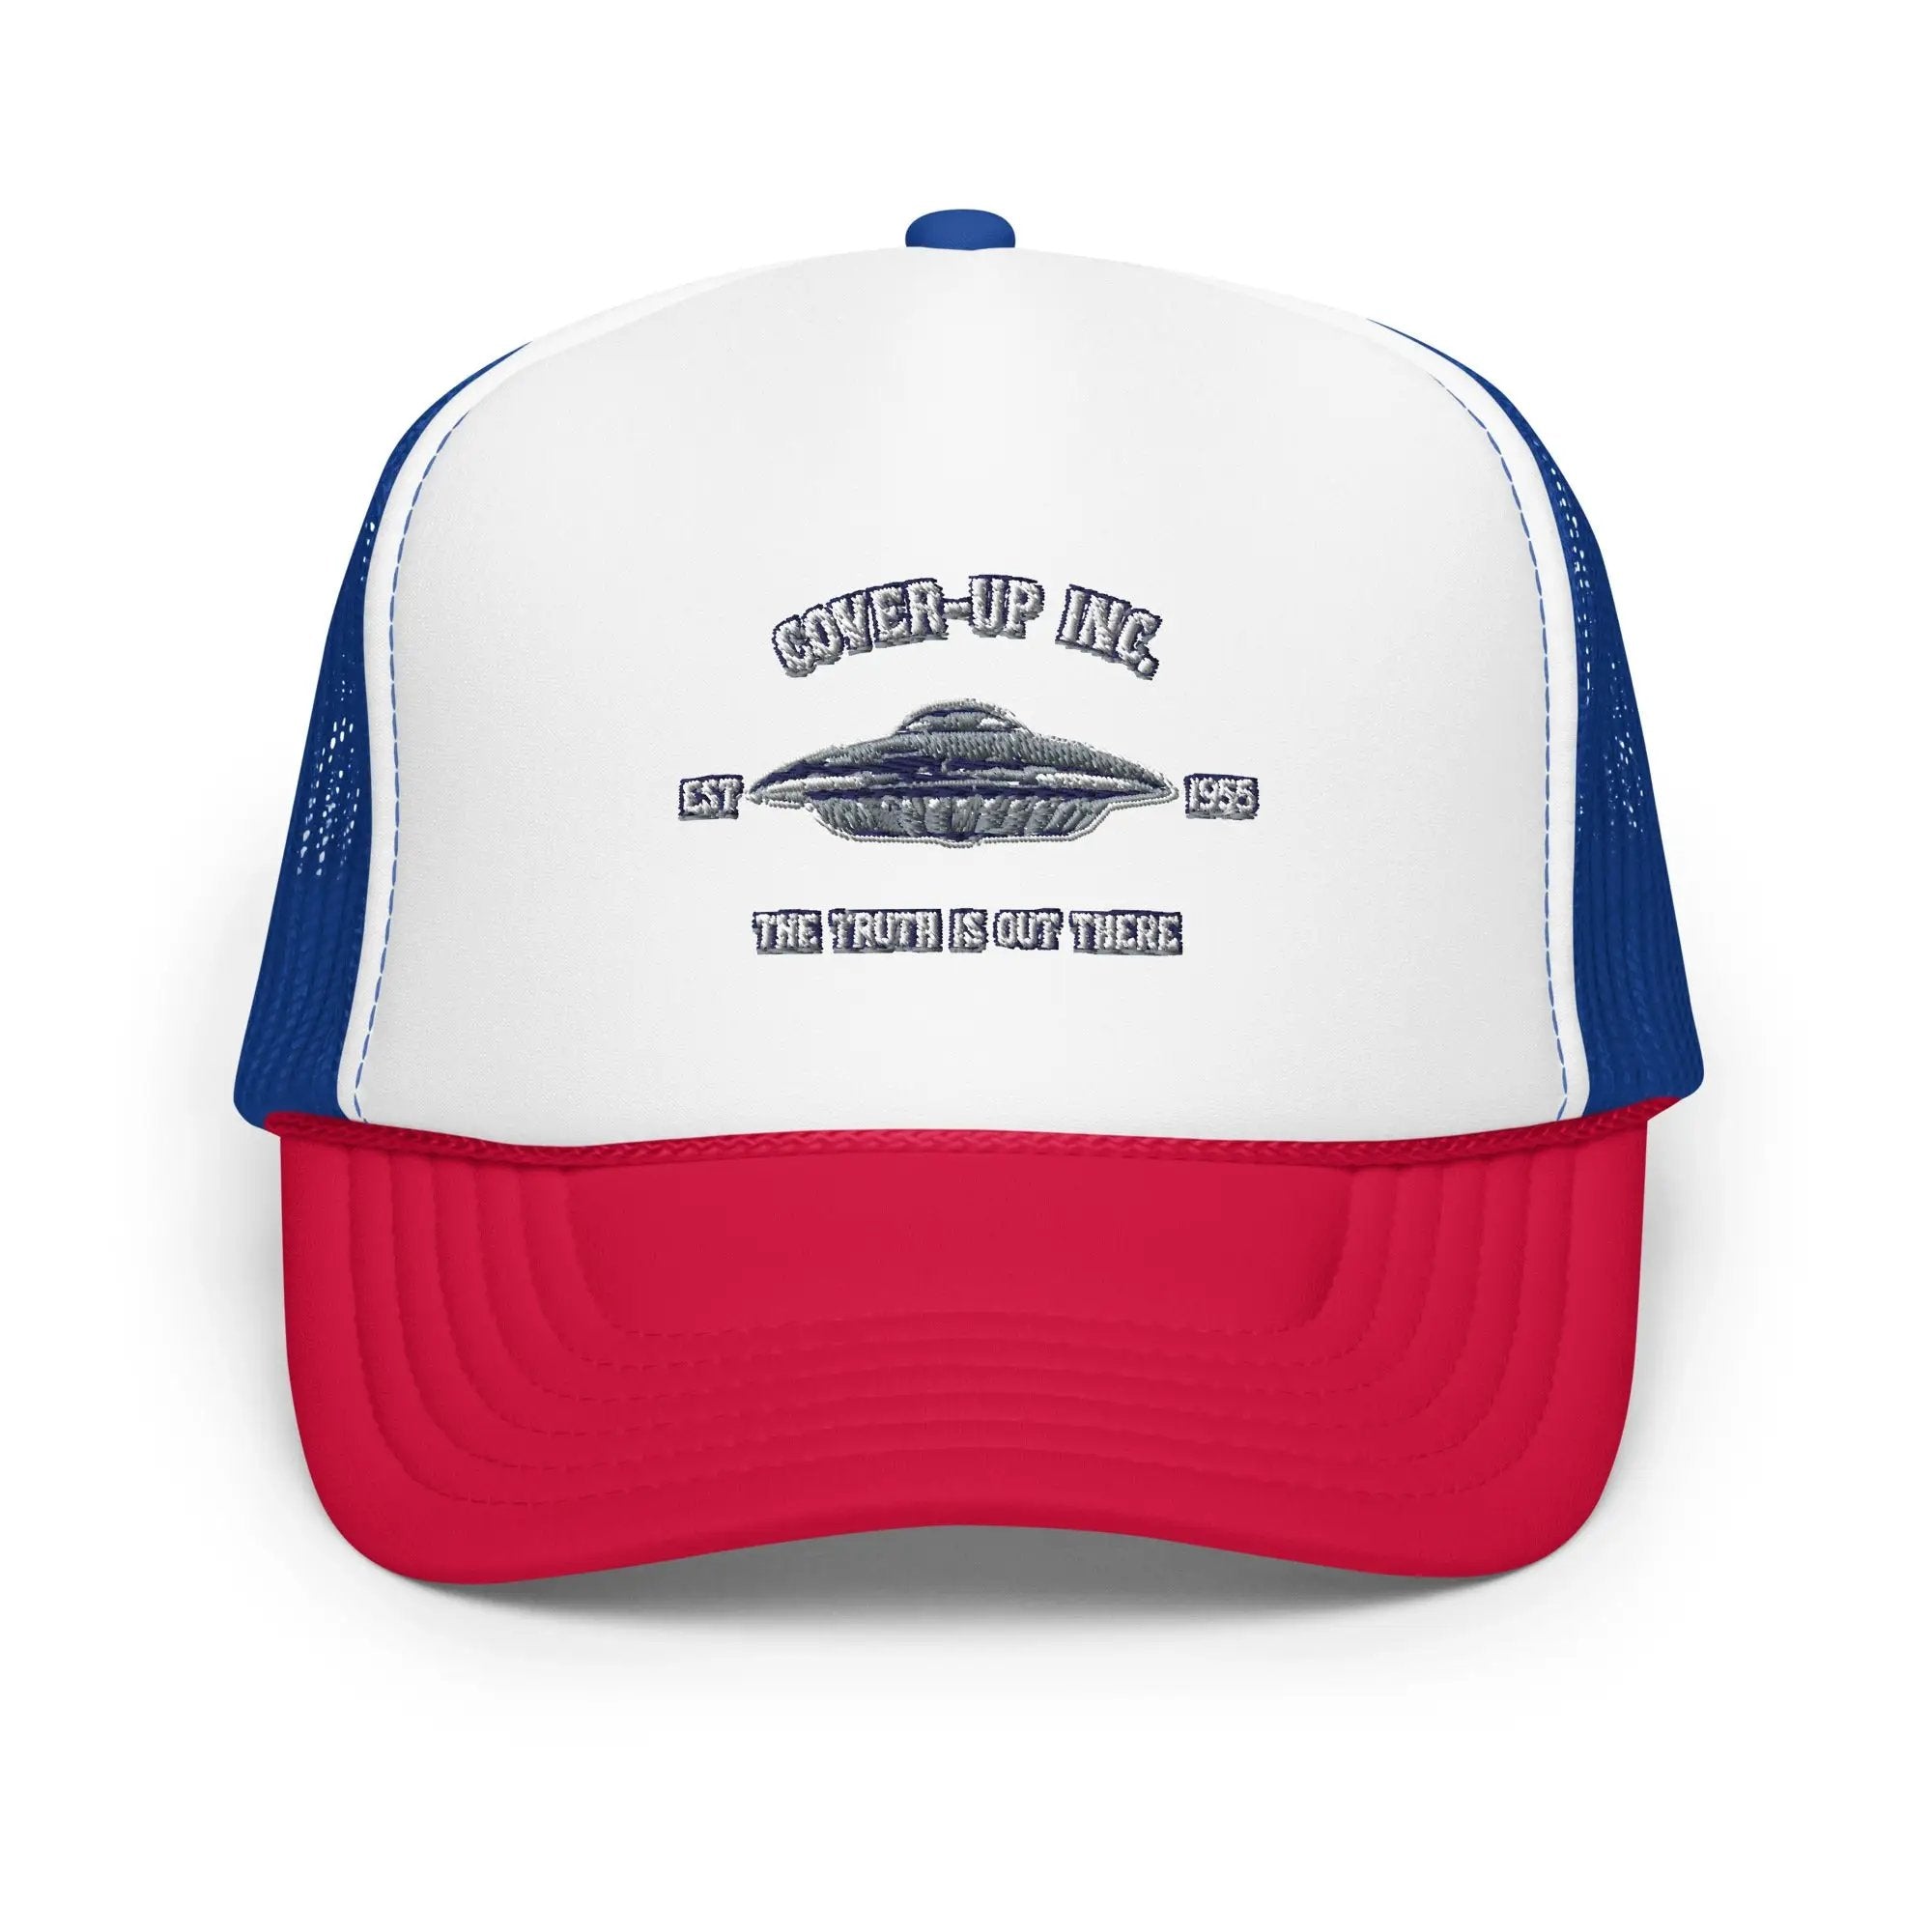 Cover-Up Inc. Foam trucker hat